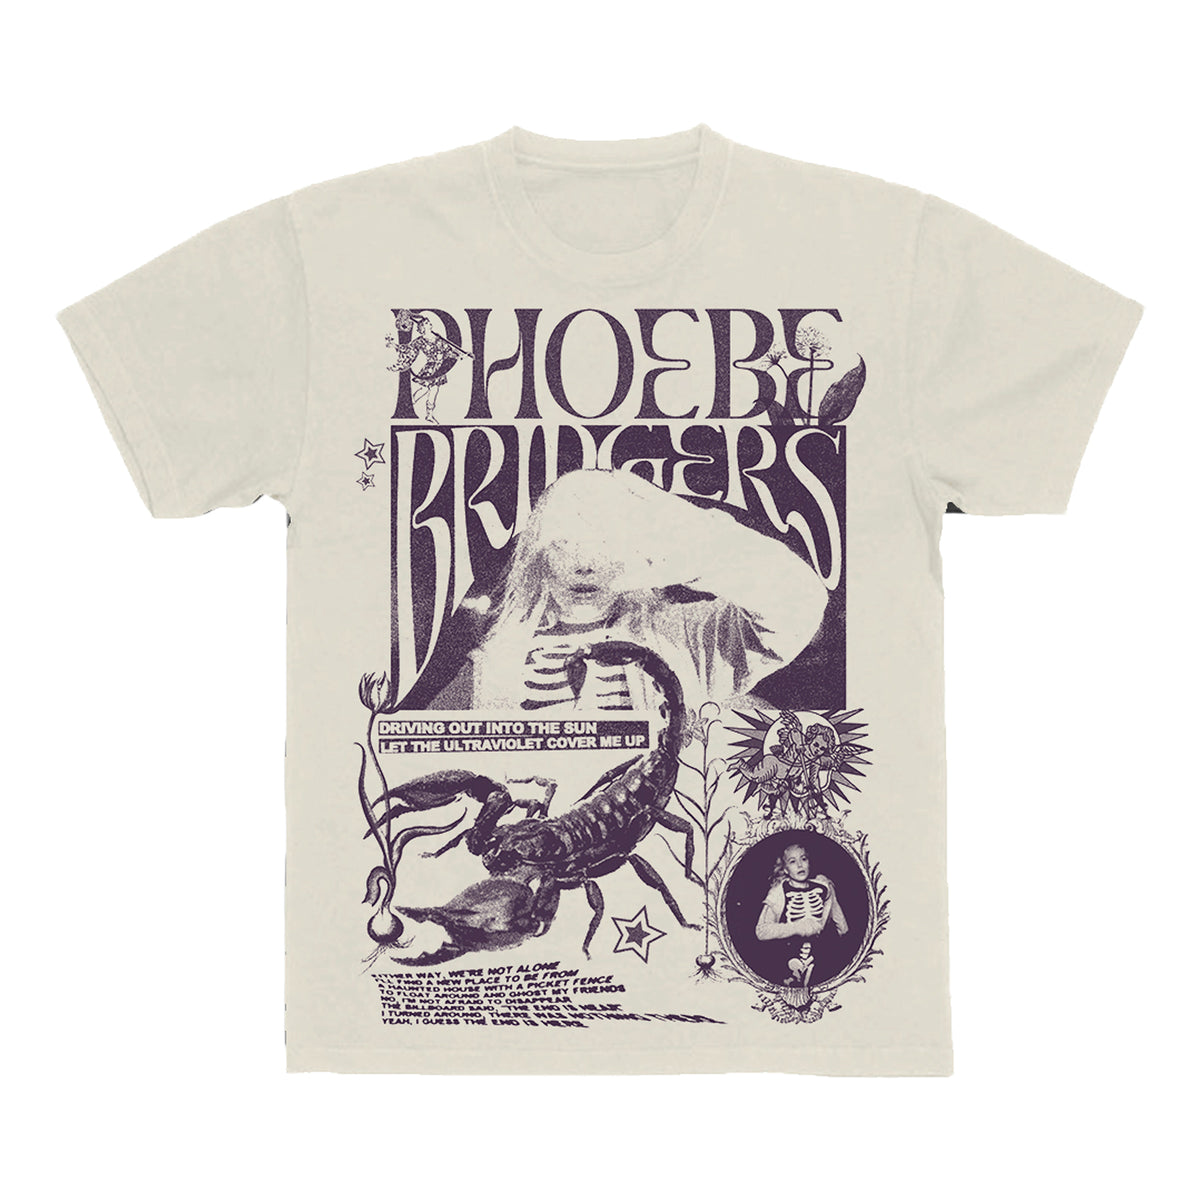 I Know the End T-Shirt Phoebe Bridgers